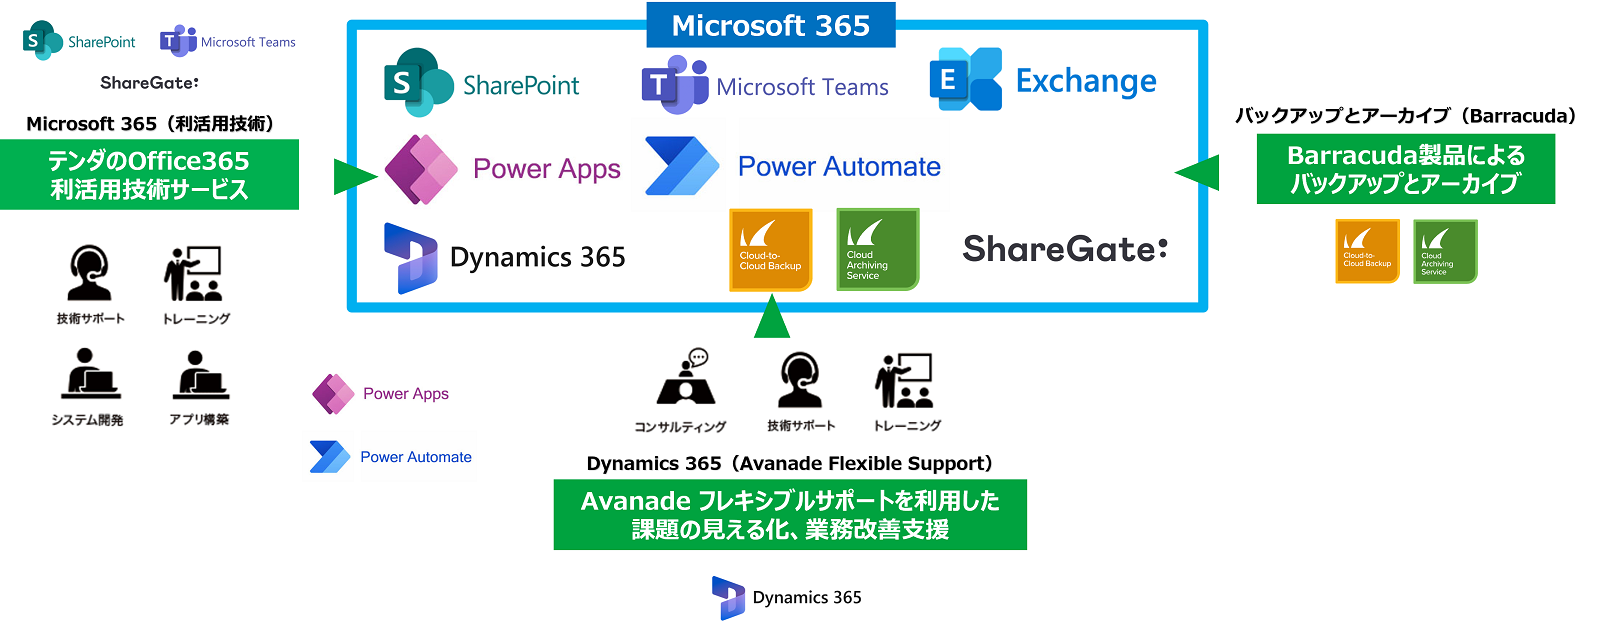 Microsoft 365を活用した業務改善を支援